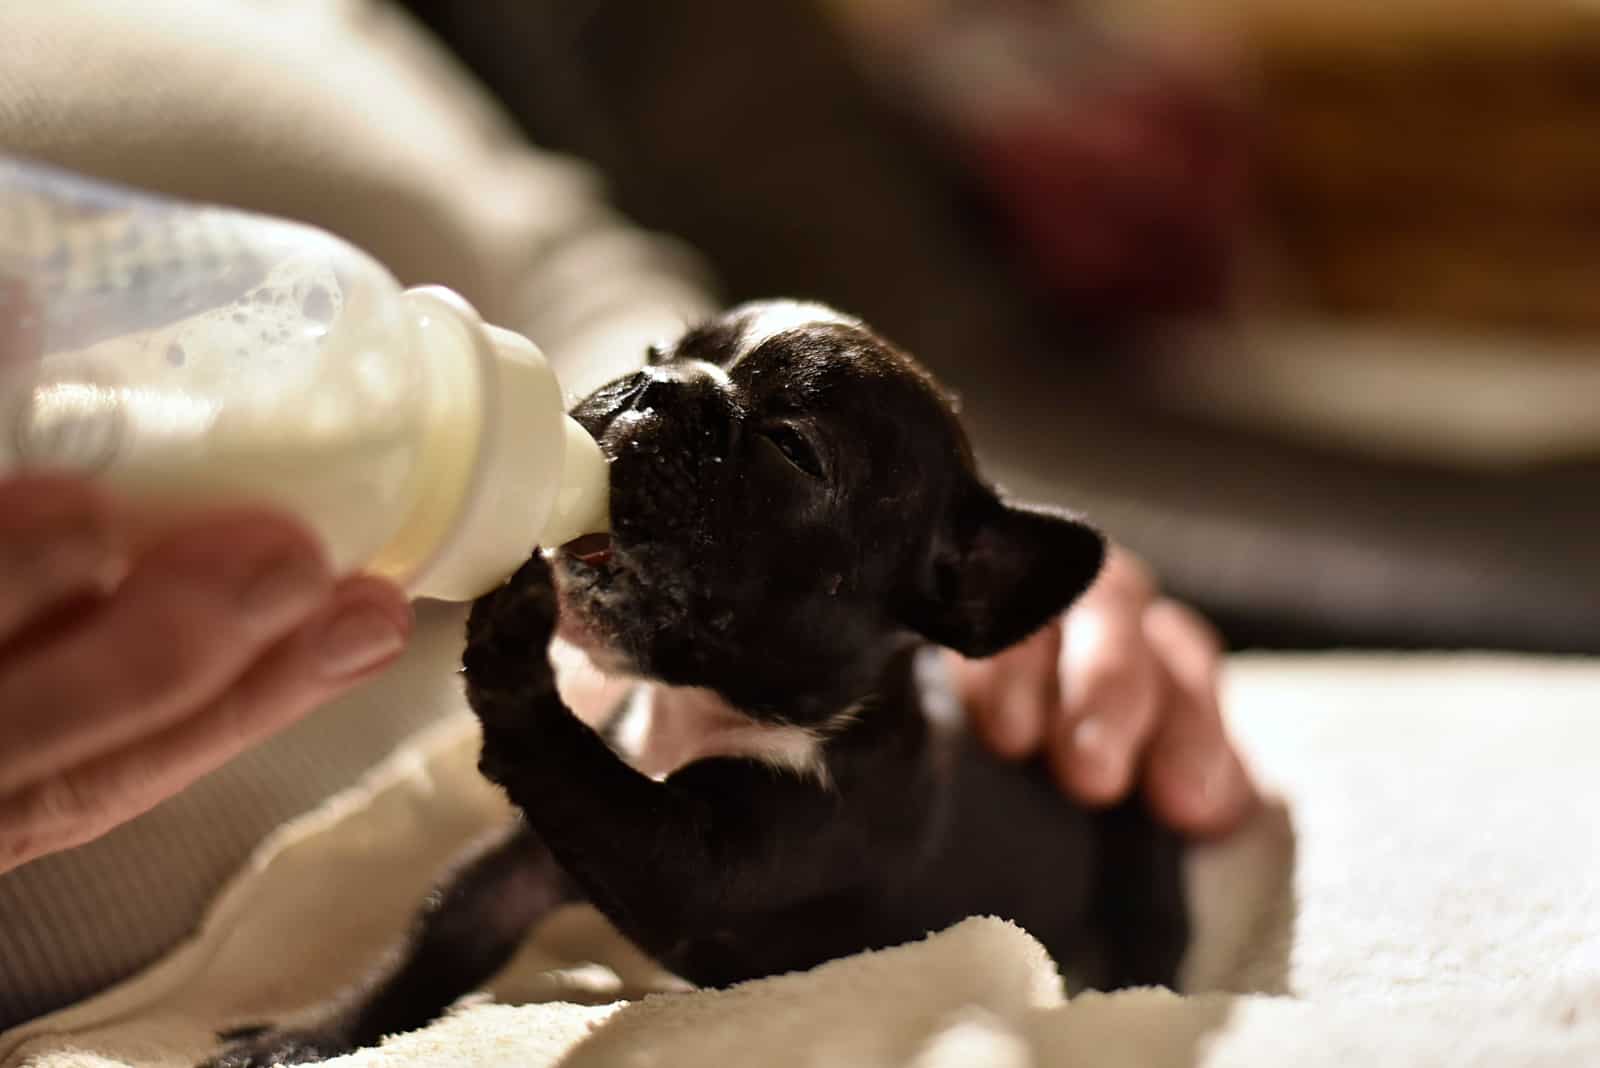 a newborn french bulldog drinks milk from a baby bottle